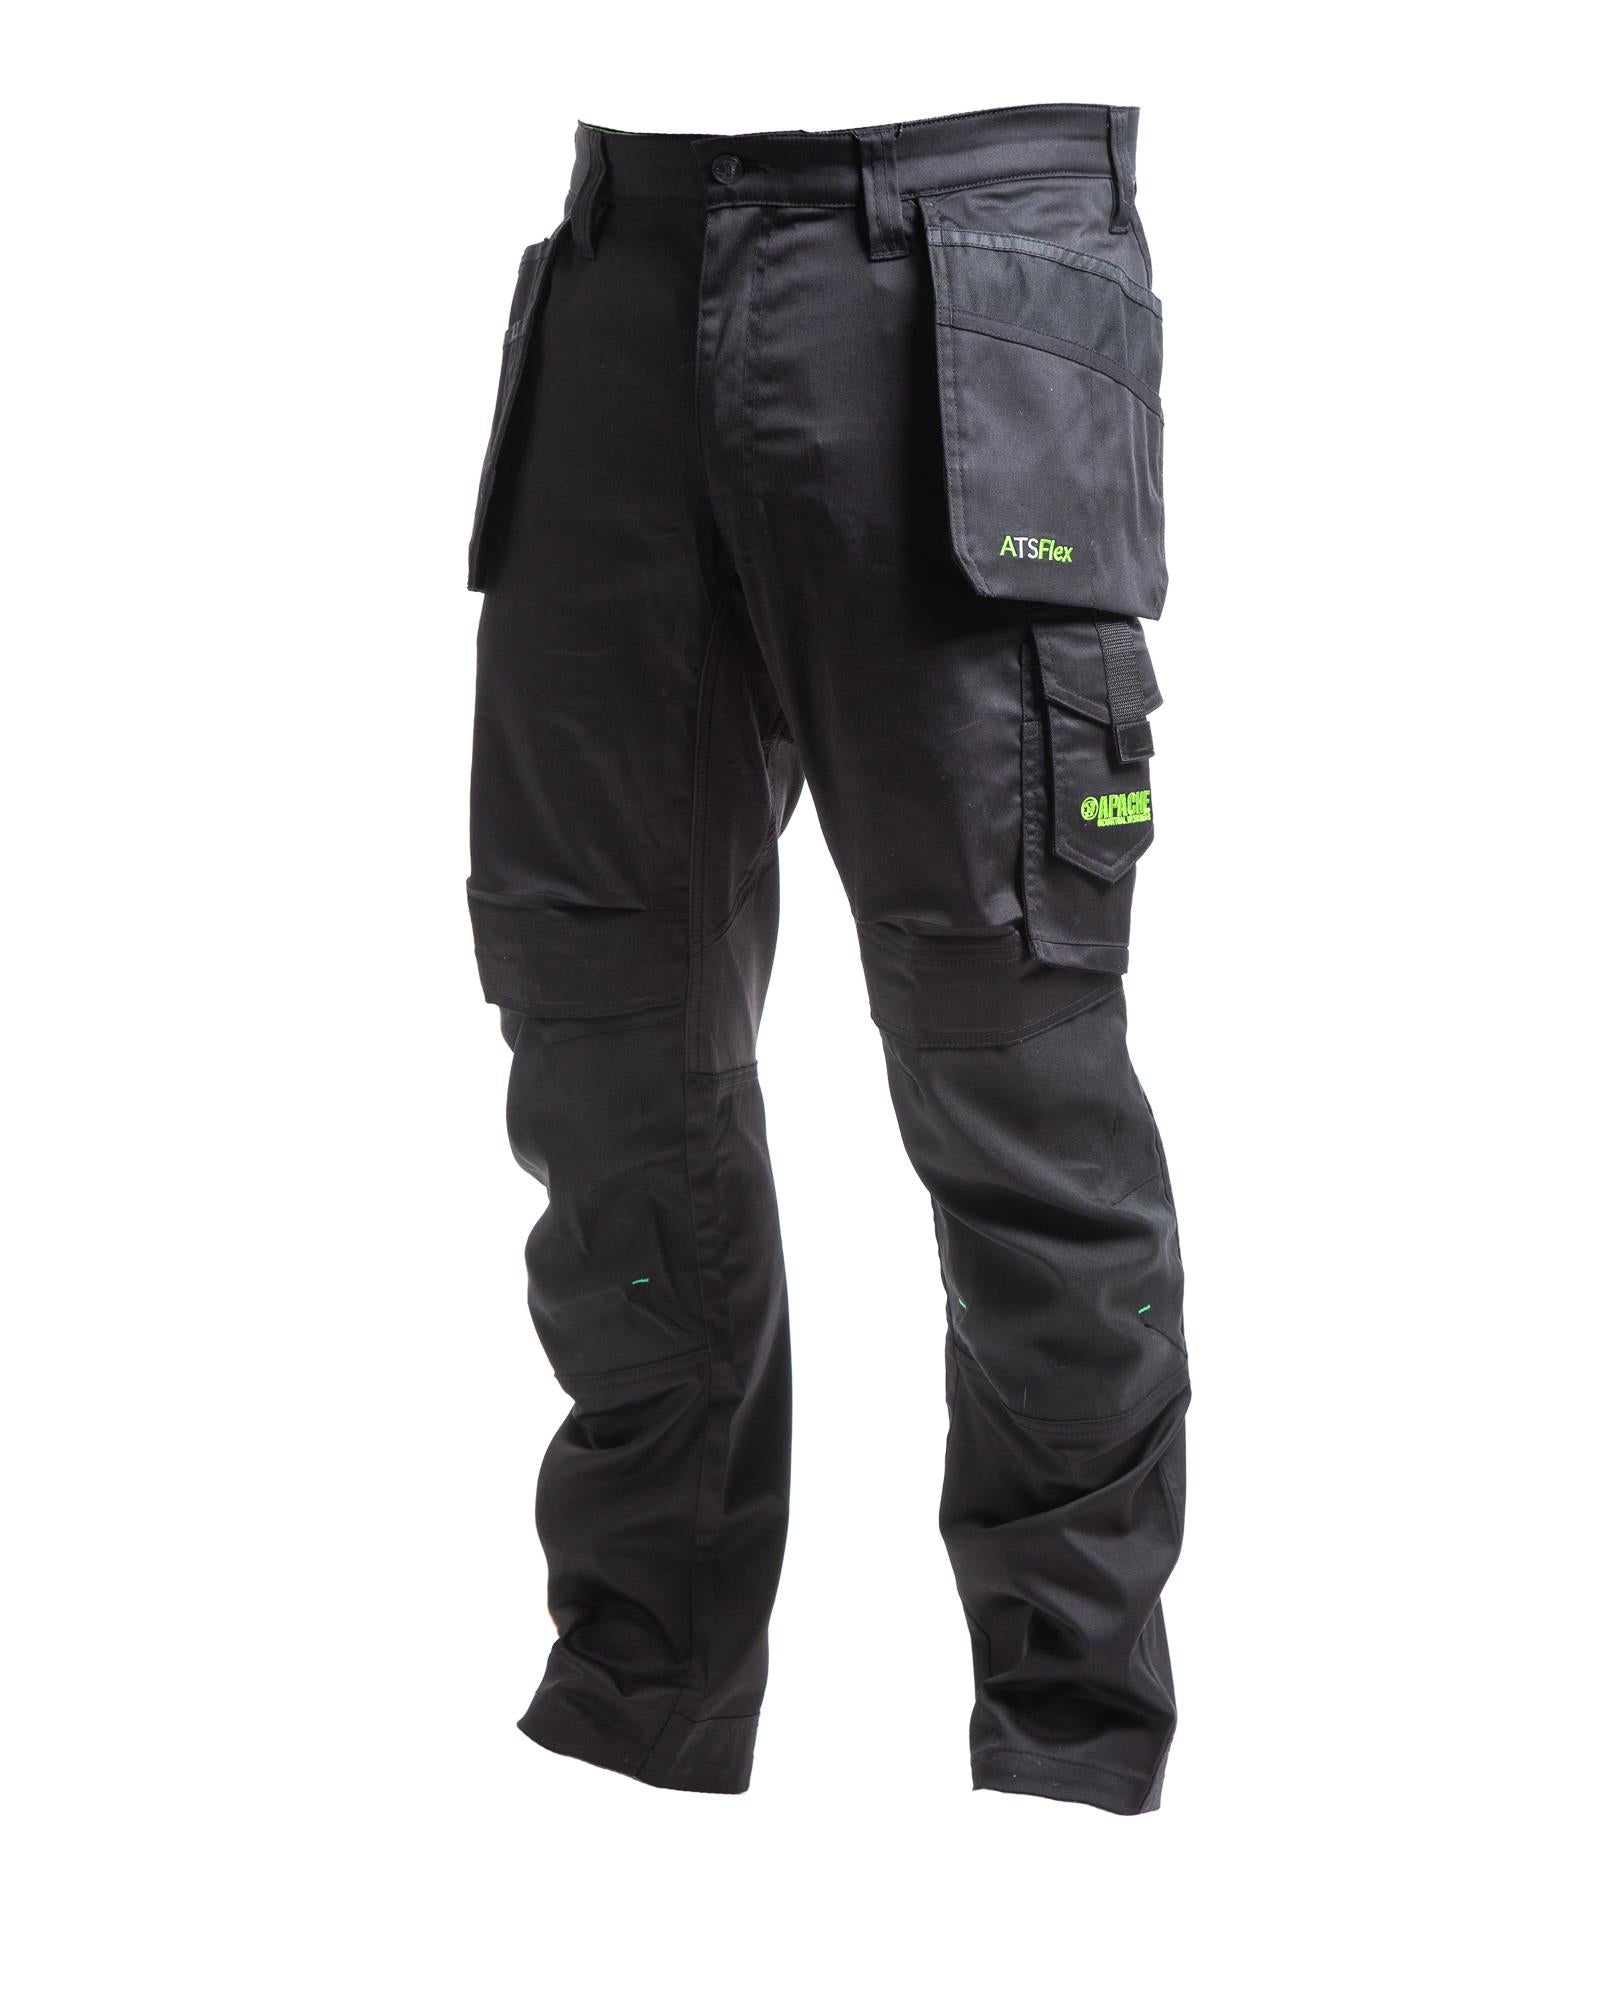 Apache Bancroft slim fit stretch flex holster knee pad pockets work trousers